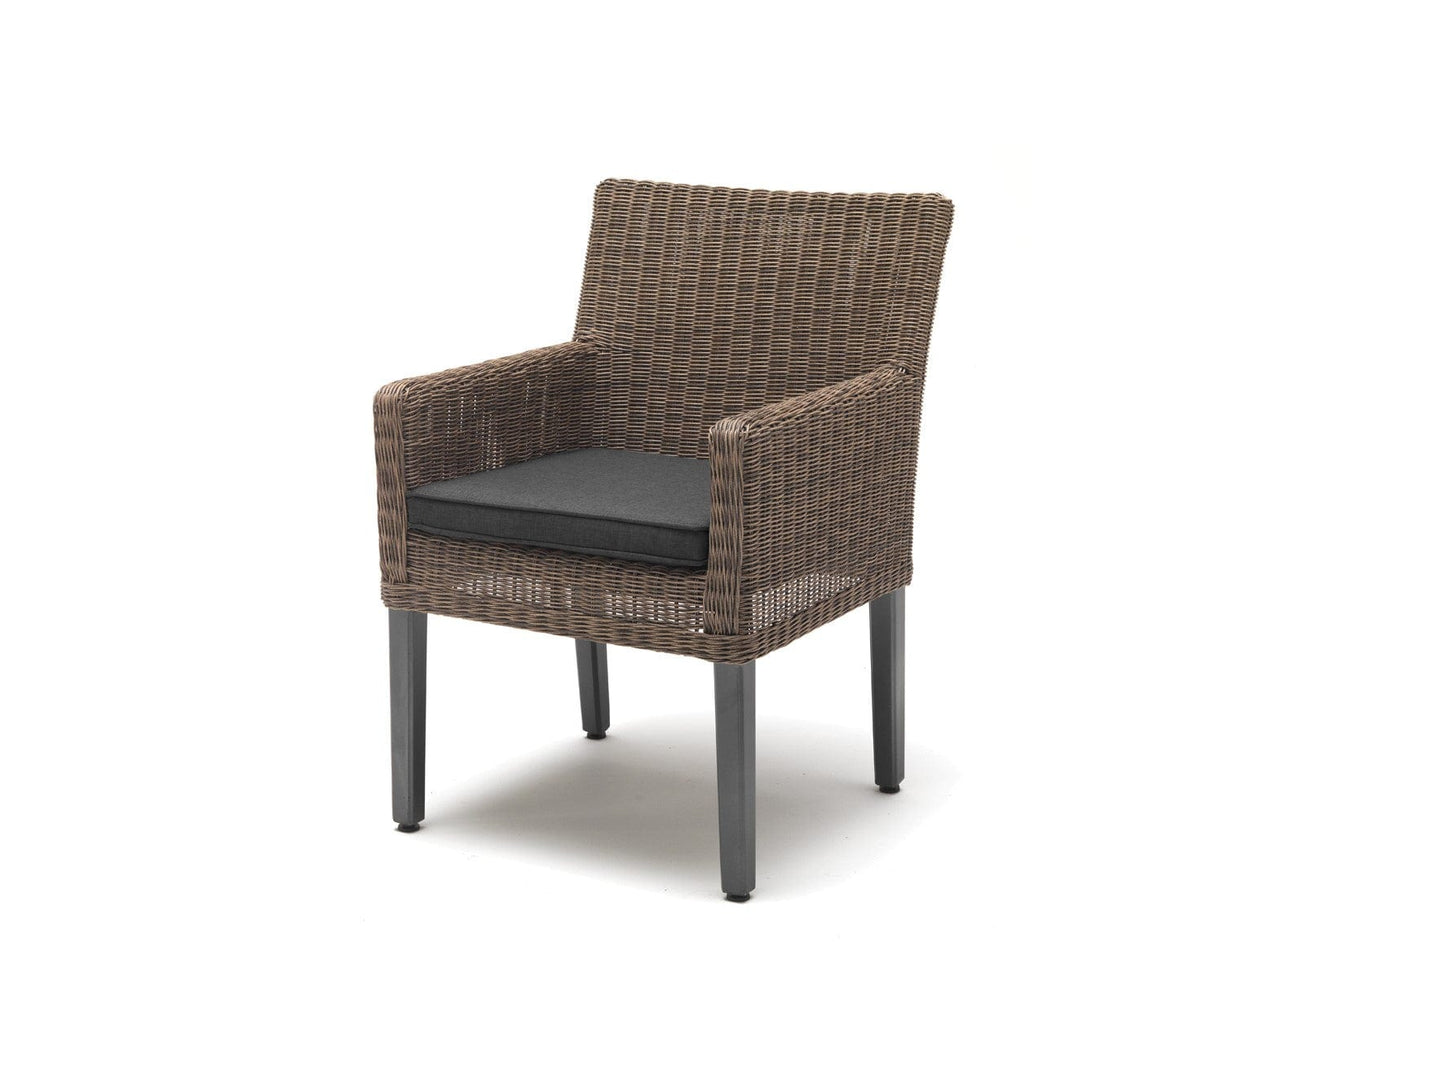 BRETANGE Outdoor Chair w/ Canvas Coal Cushions, Set of 2 